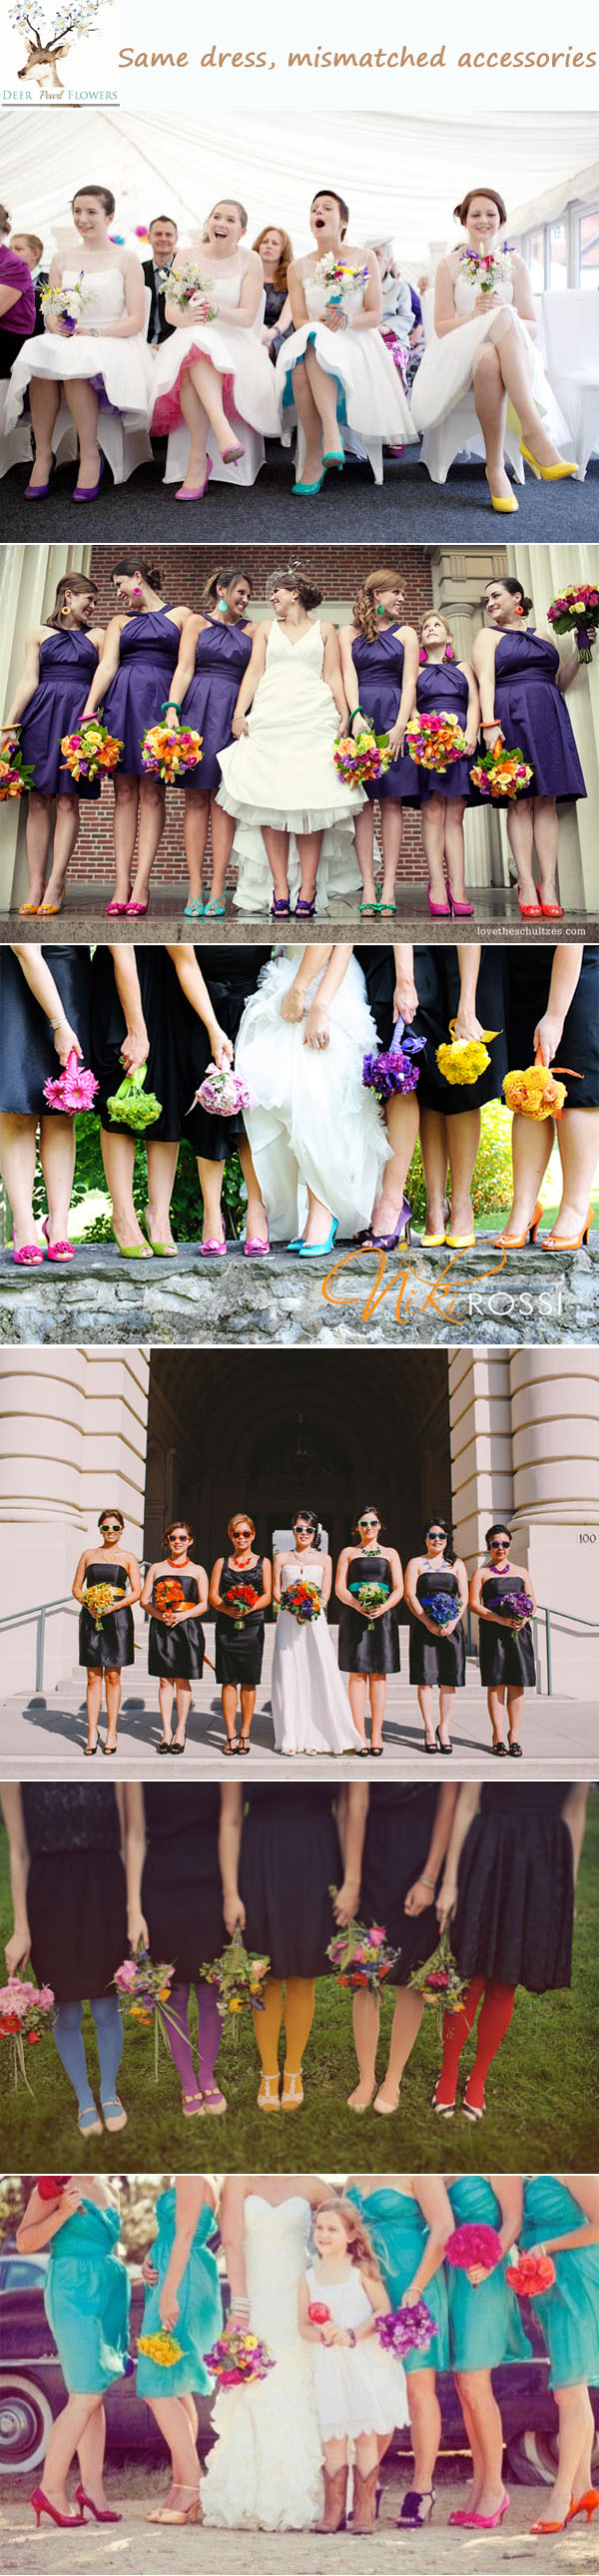 mismacth bridesmaid dresses-same dress mismacthes accessories